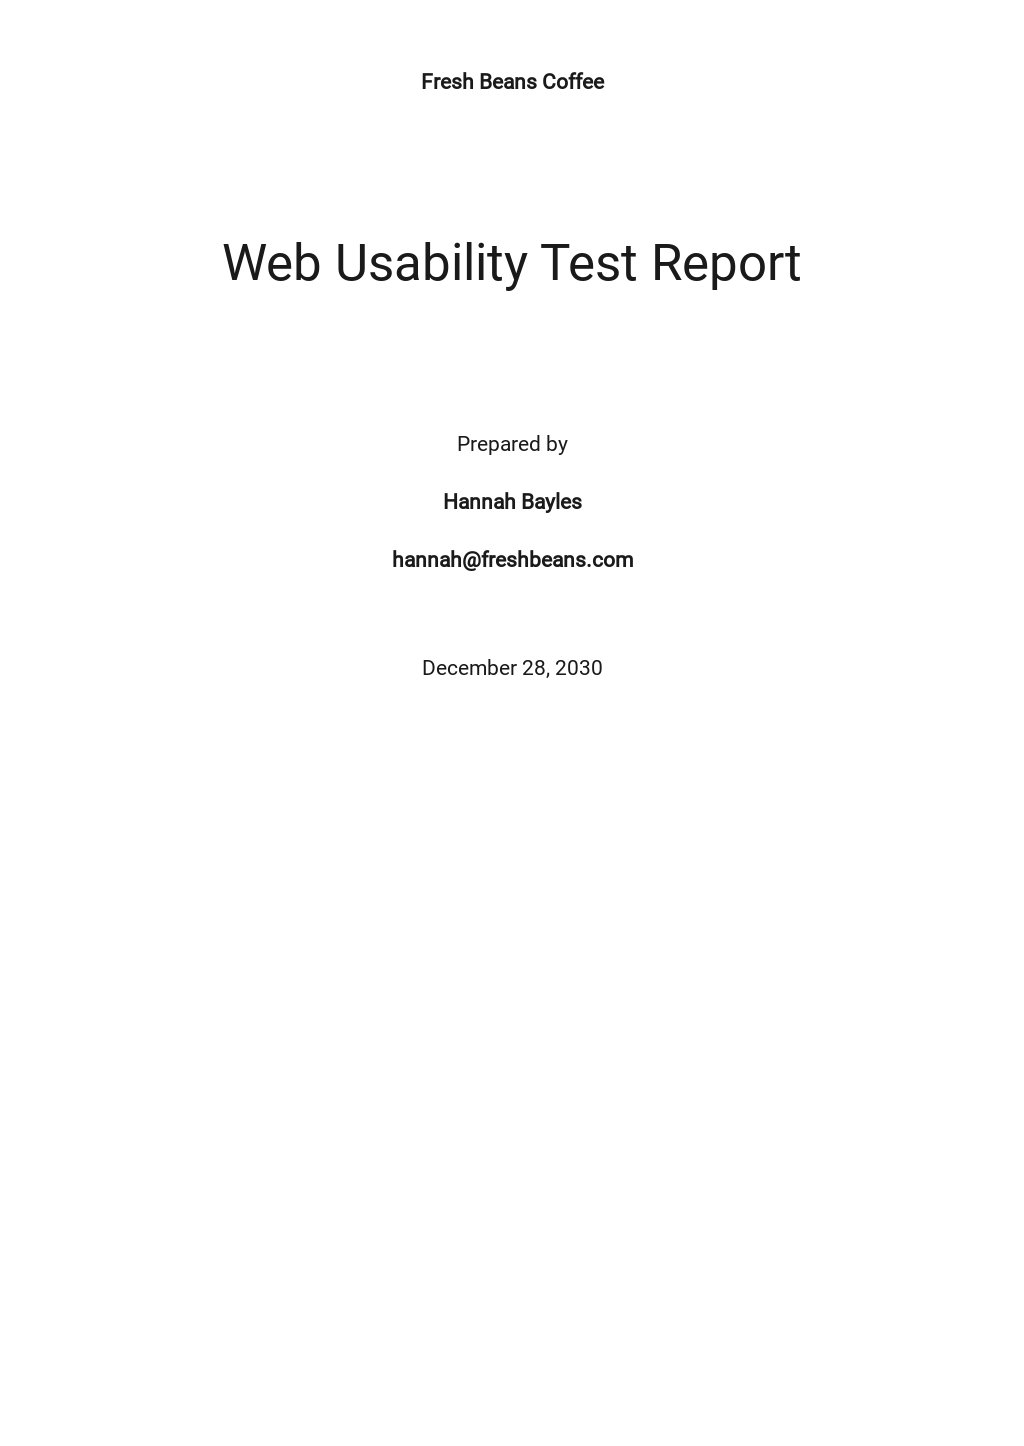 Web Usability Test Report Template.jpe